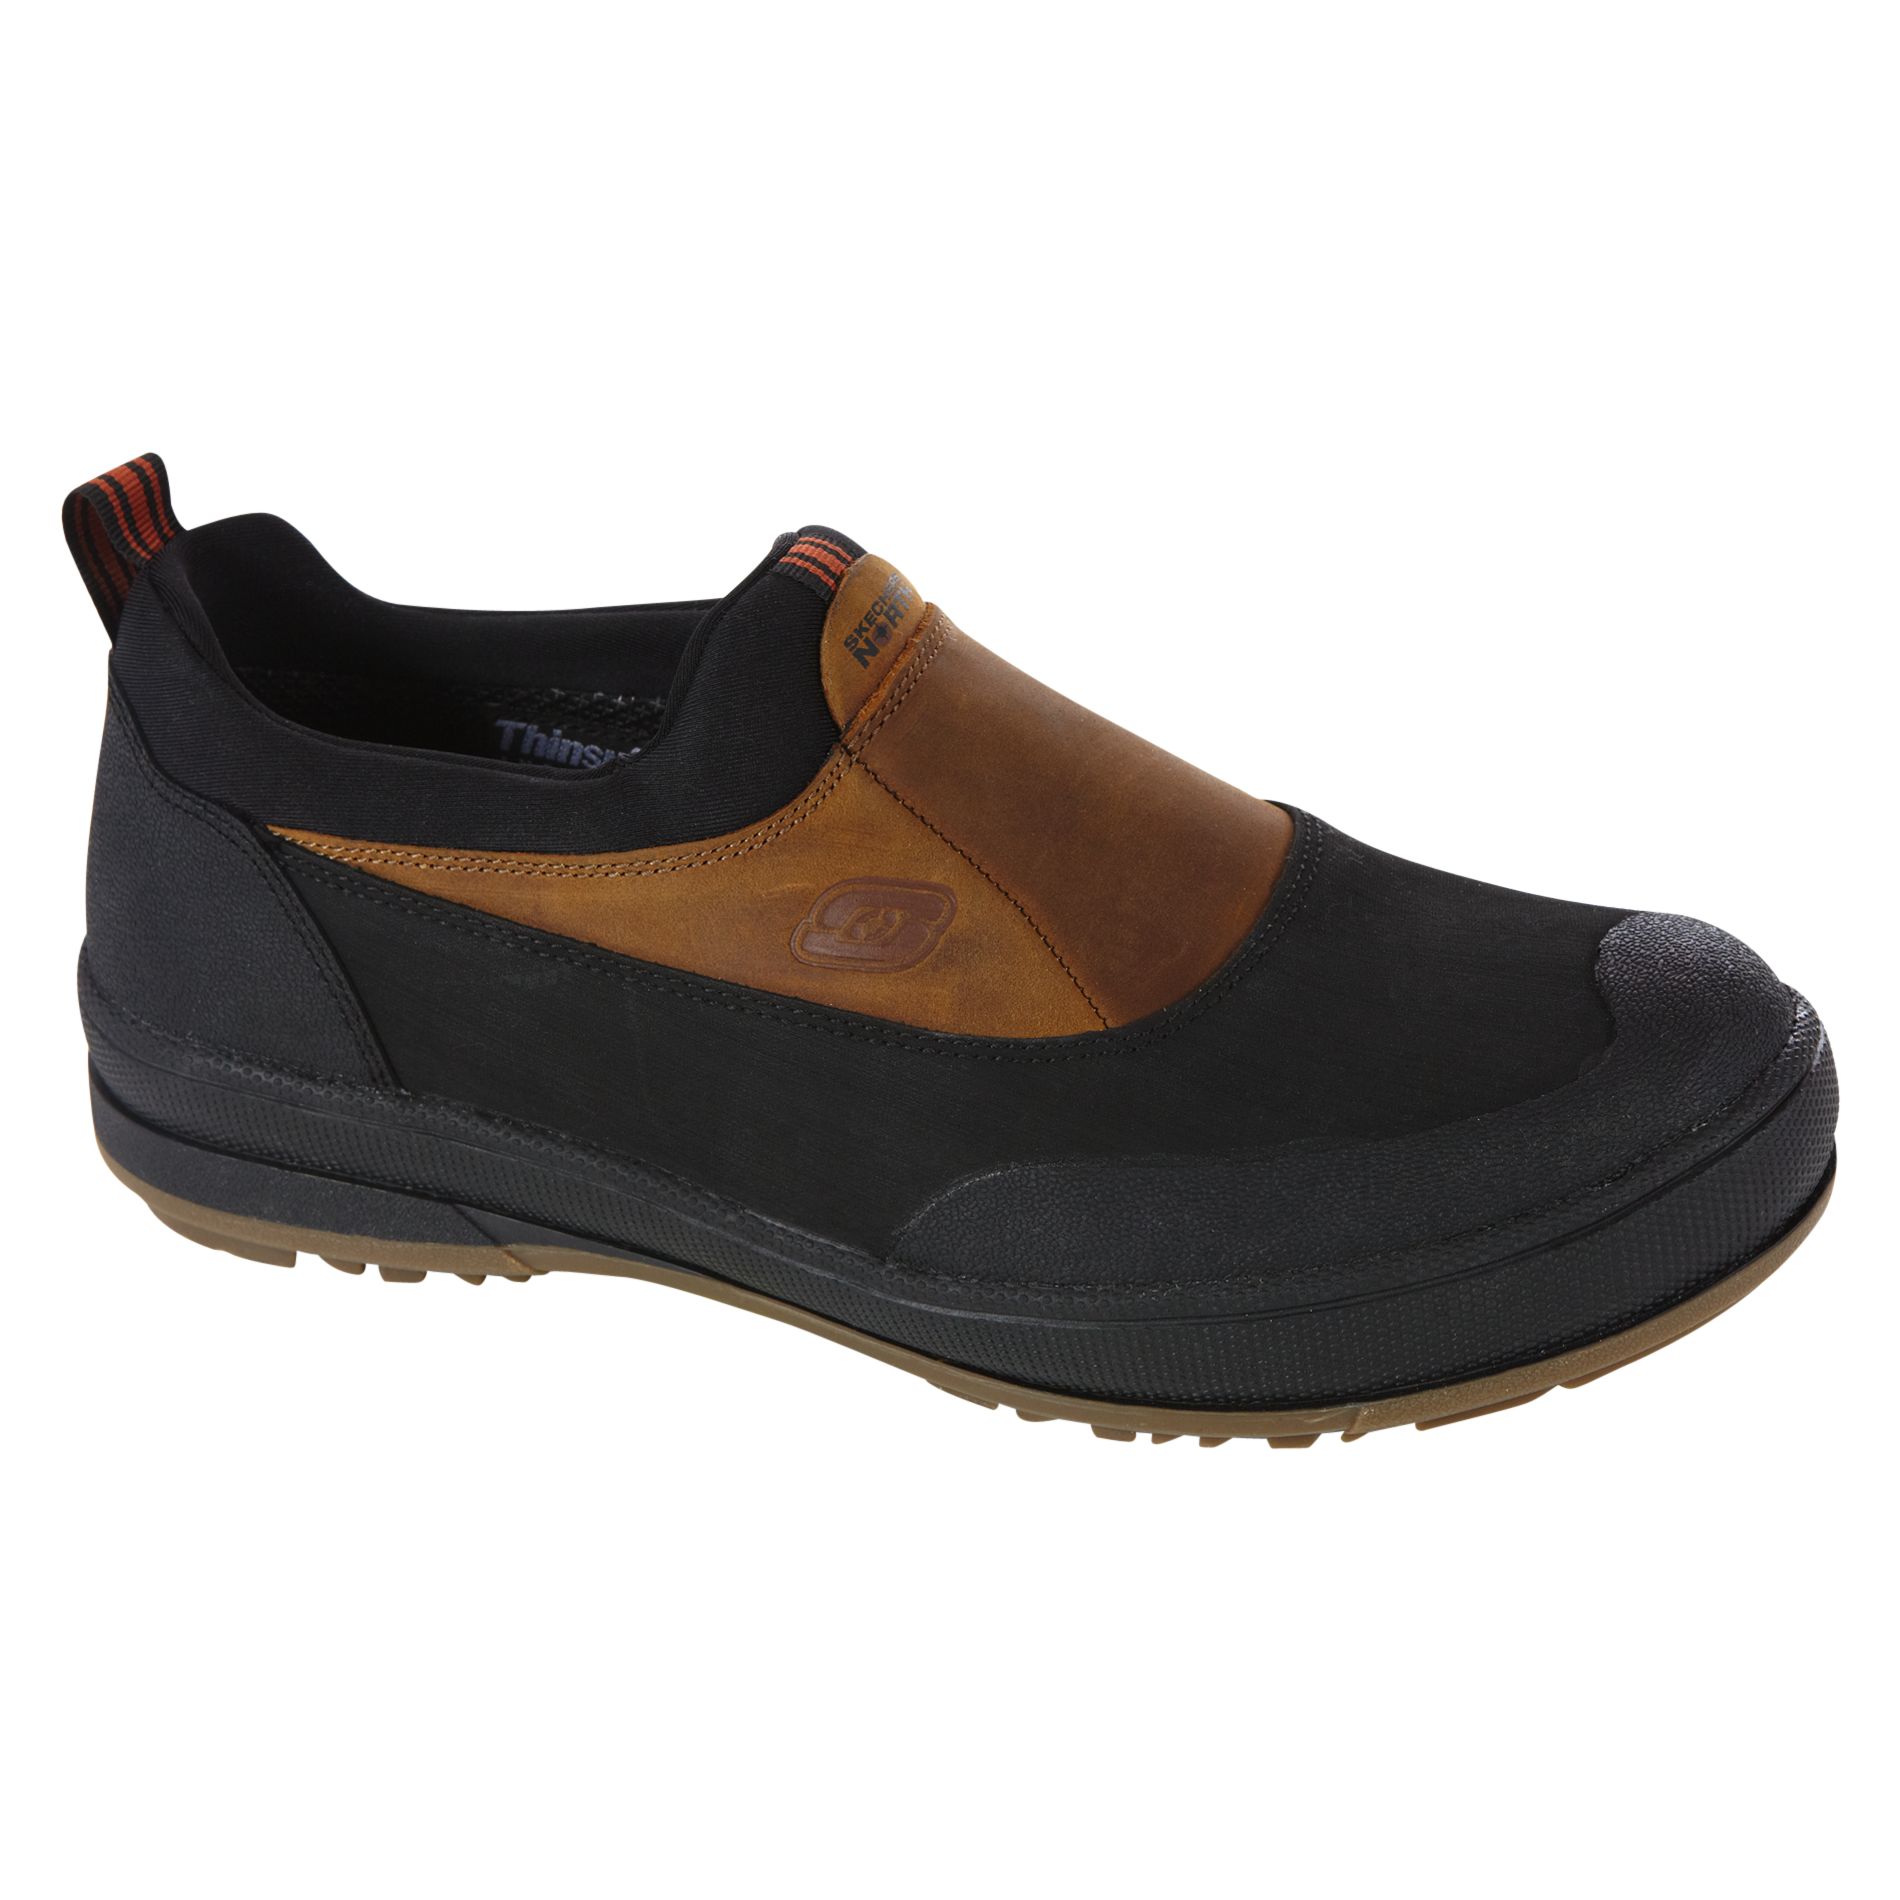 Skechers Men's Rene Casual Shoe- Black/Brown